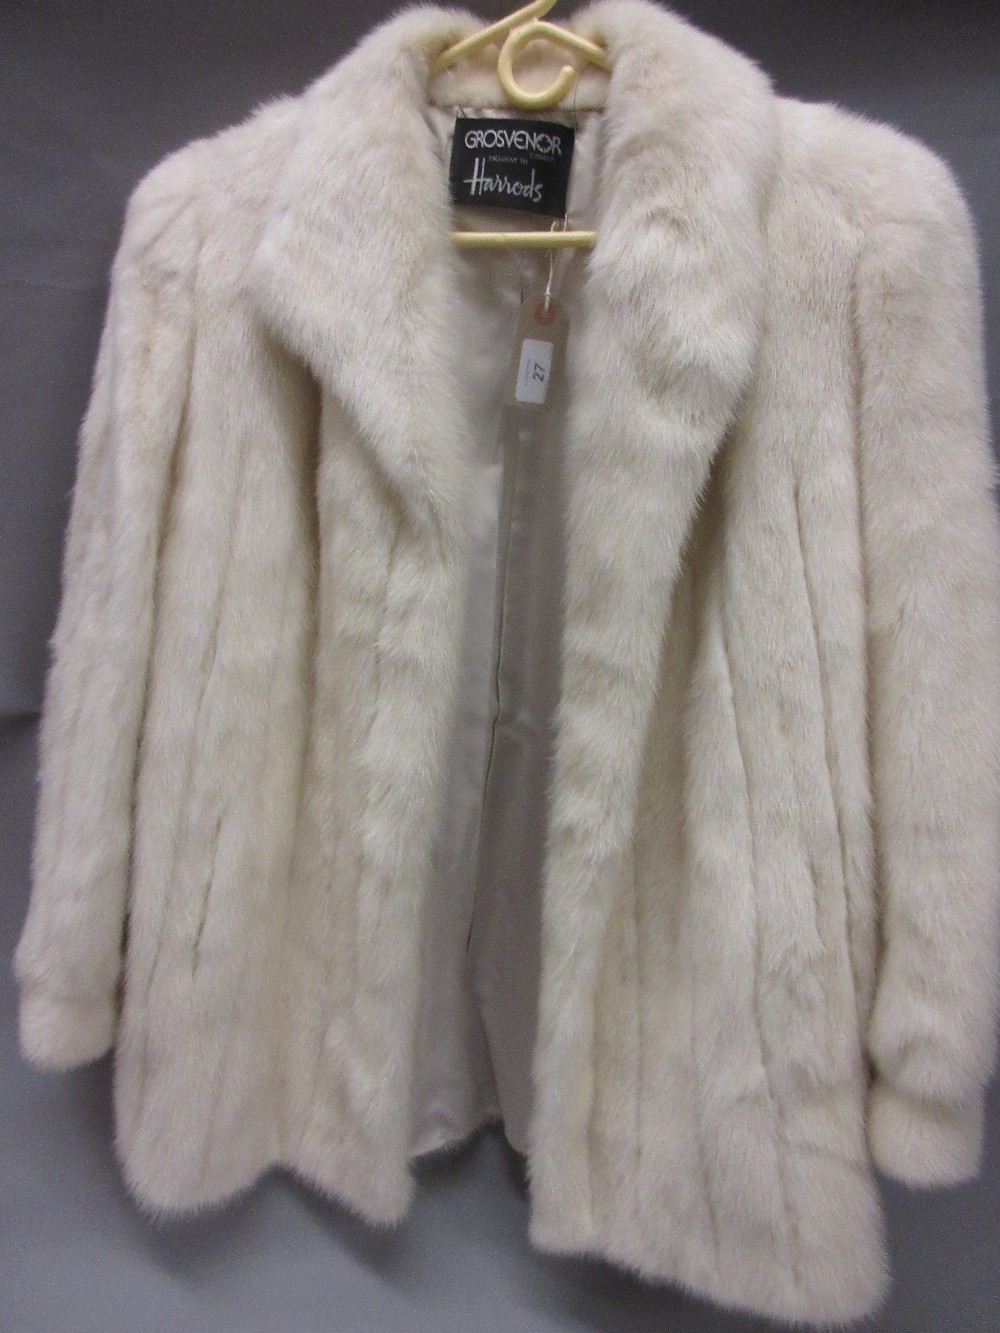 Ladies white fur half length fur coat by Grosvenor exclusive to Harrods,